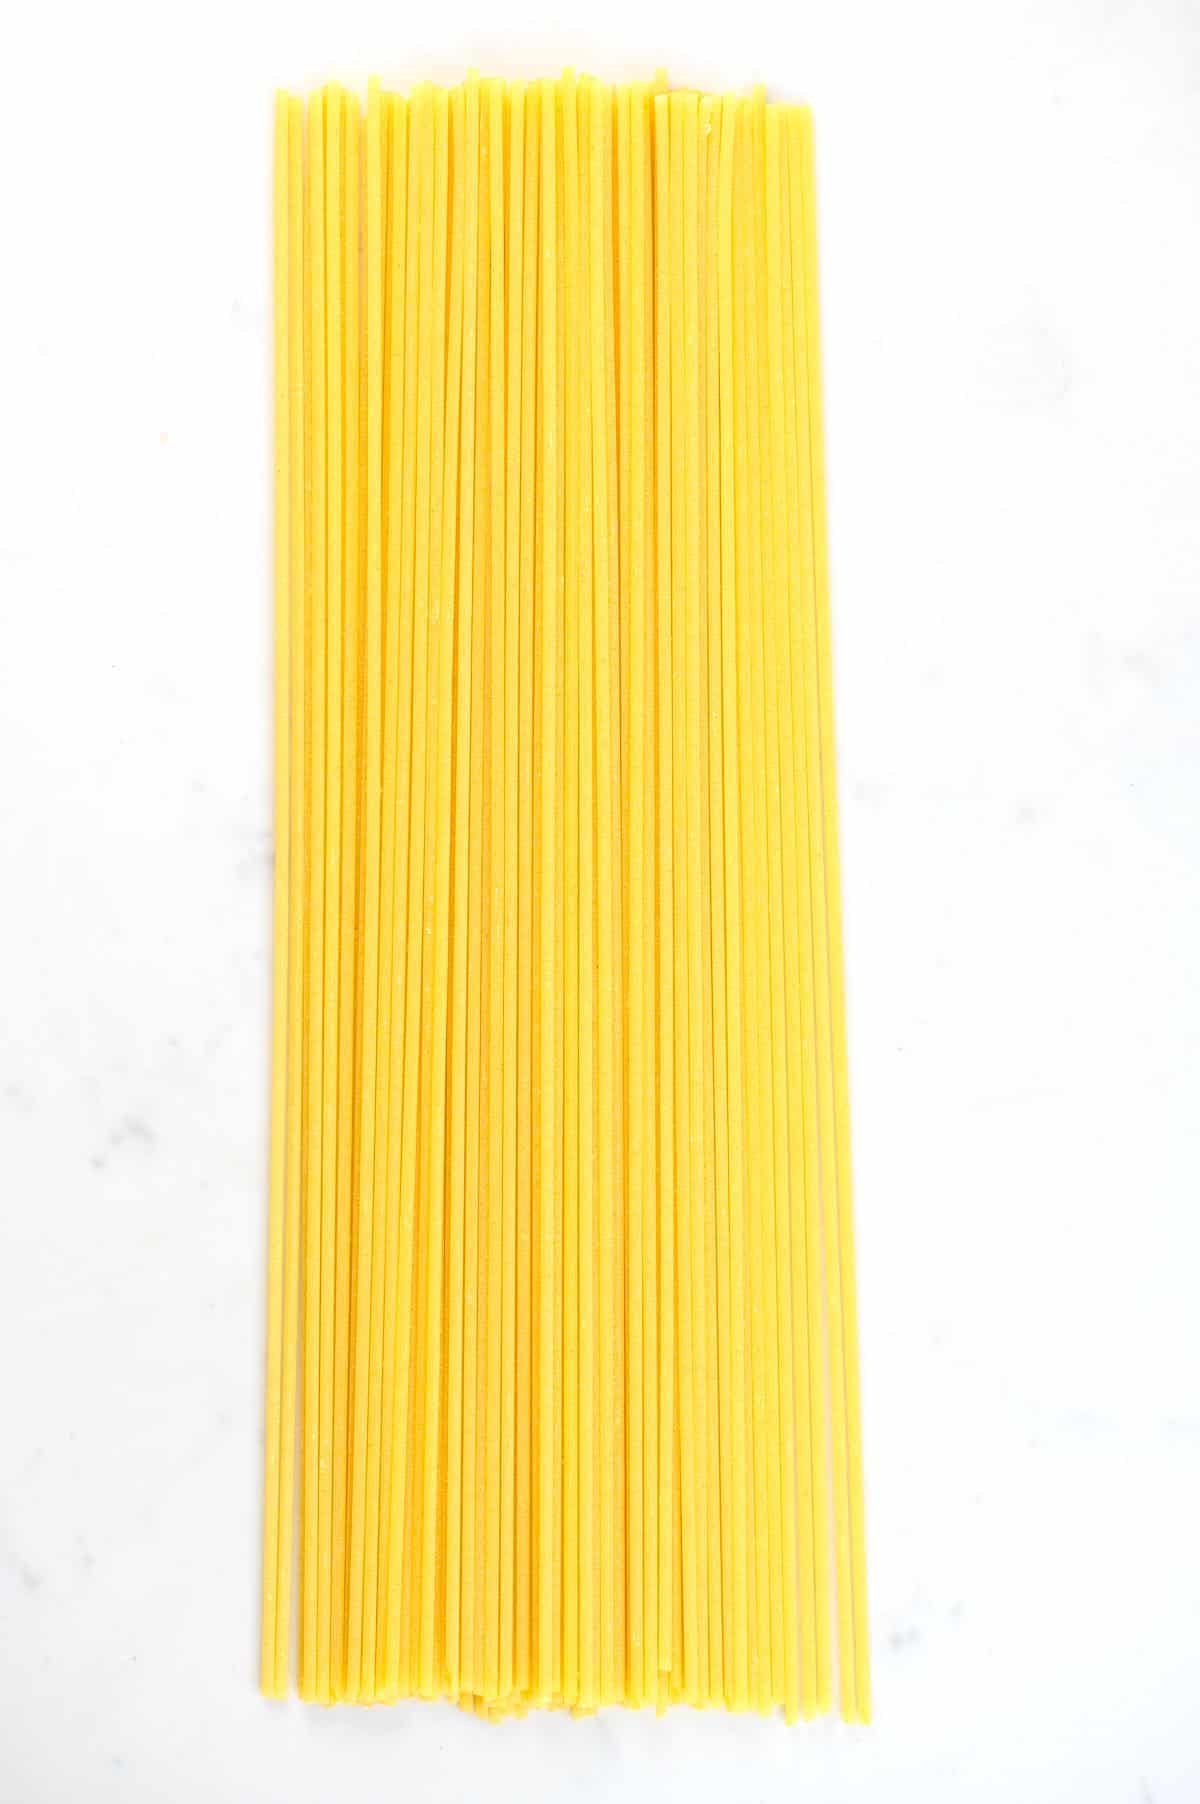 Spaghetti in a flat white surface